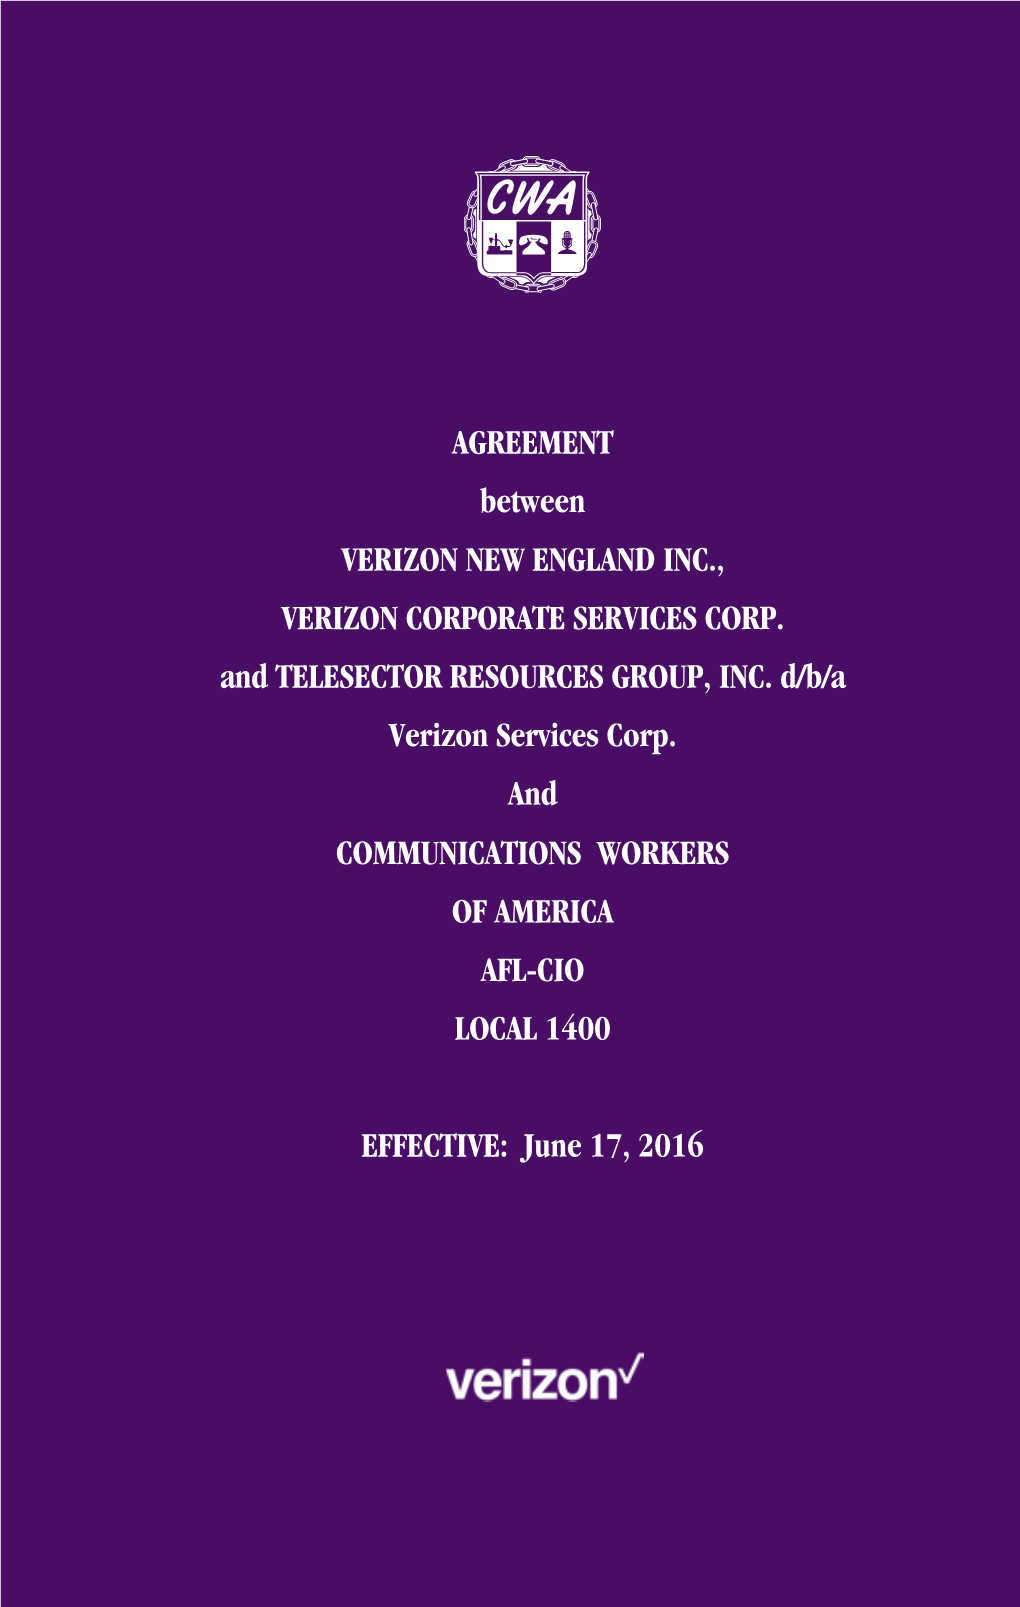 AGREEMENT Between VERIZON NEW ENGLAND INC., VERIZON CORPORATE SERVICES CORP